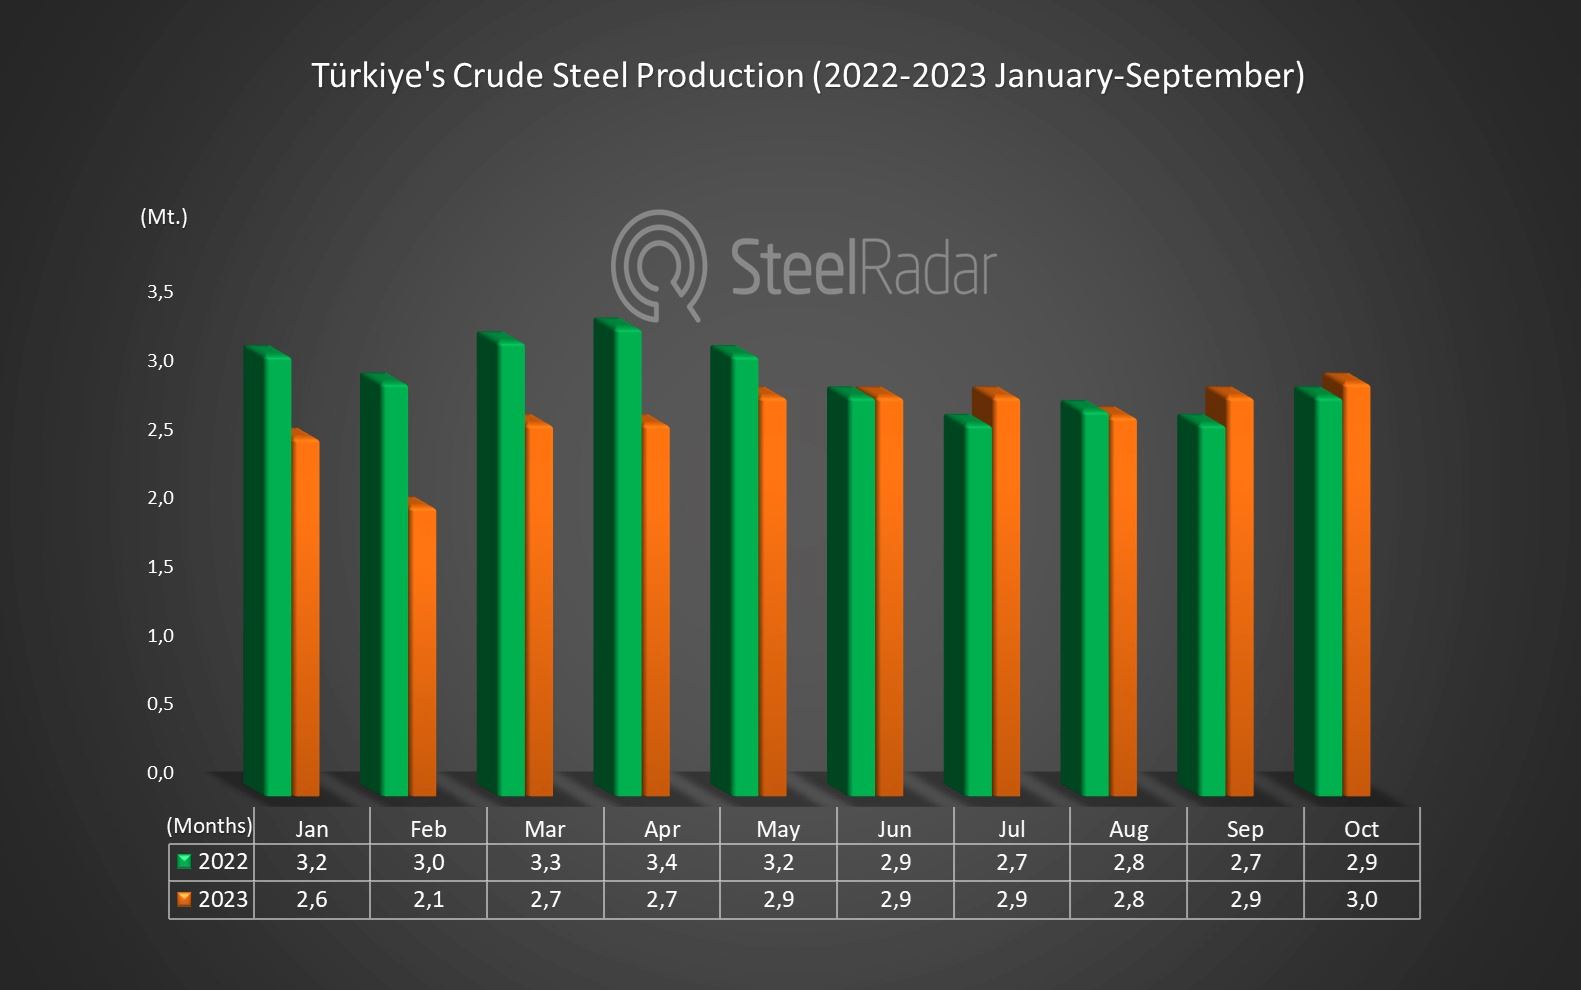 Türkiye's crude steel production increased in October